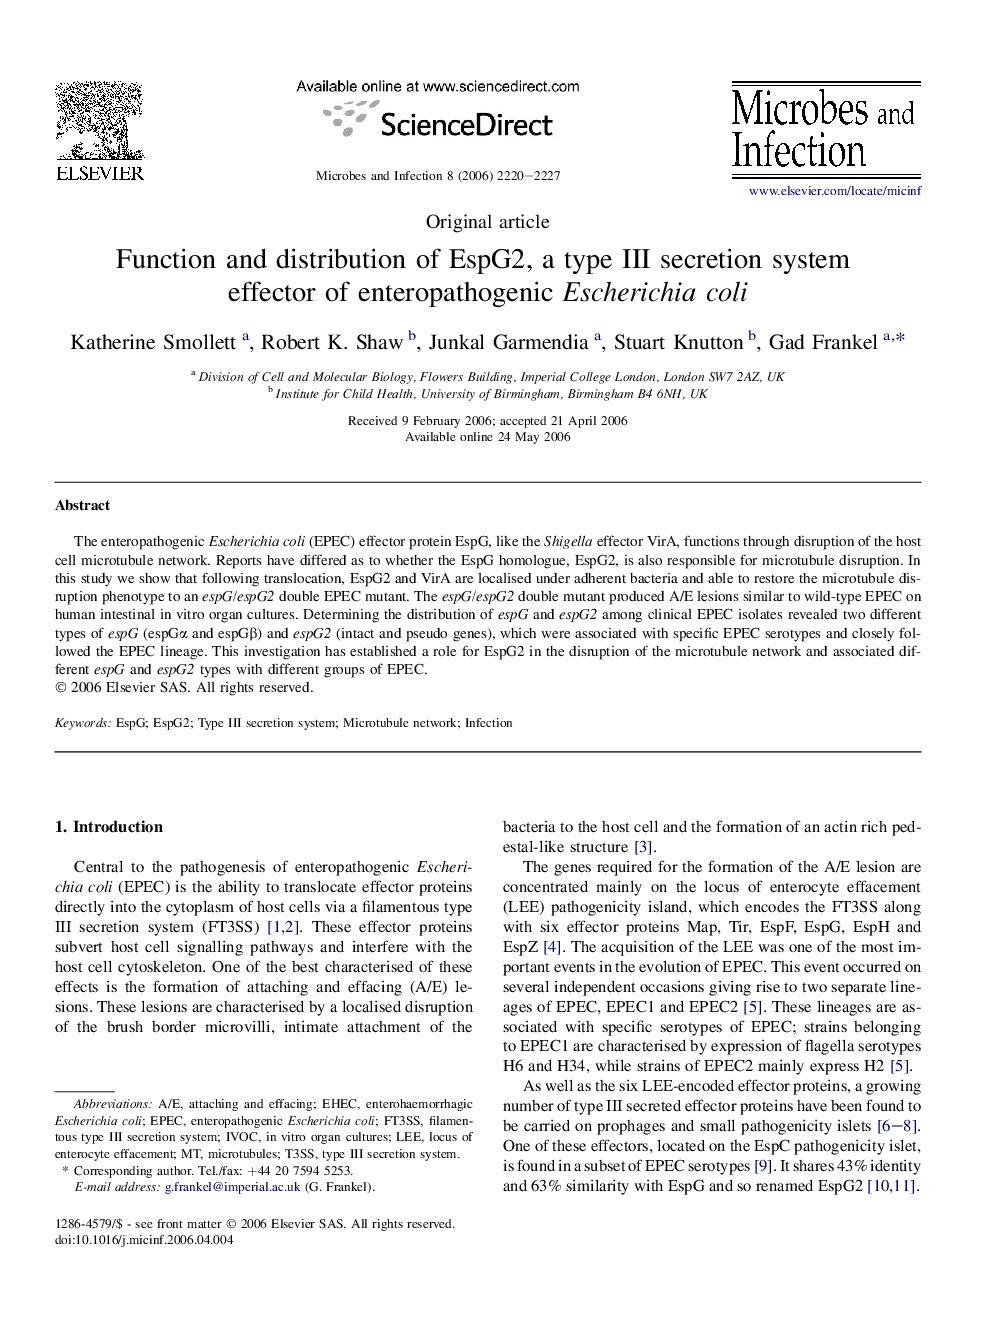 Function and distribution of EspG2, a type III secretion system effector of enteropathogenic Escherichia coli